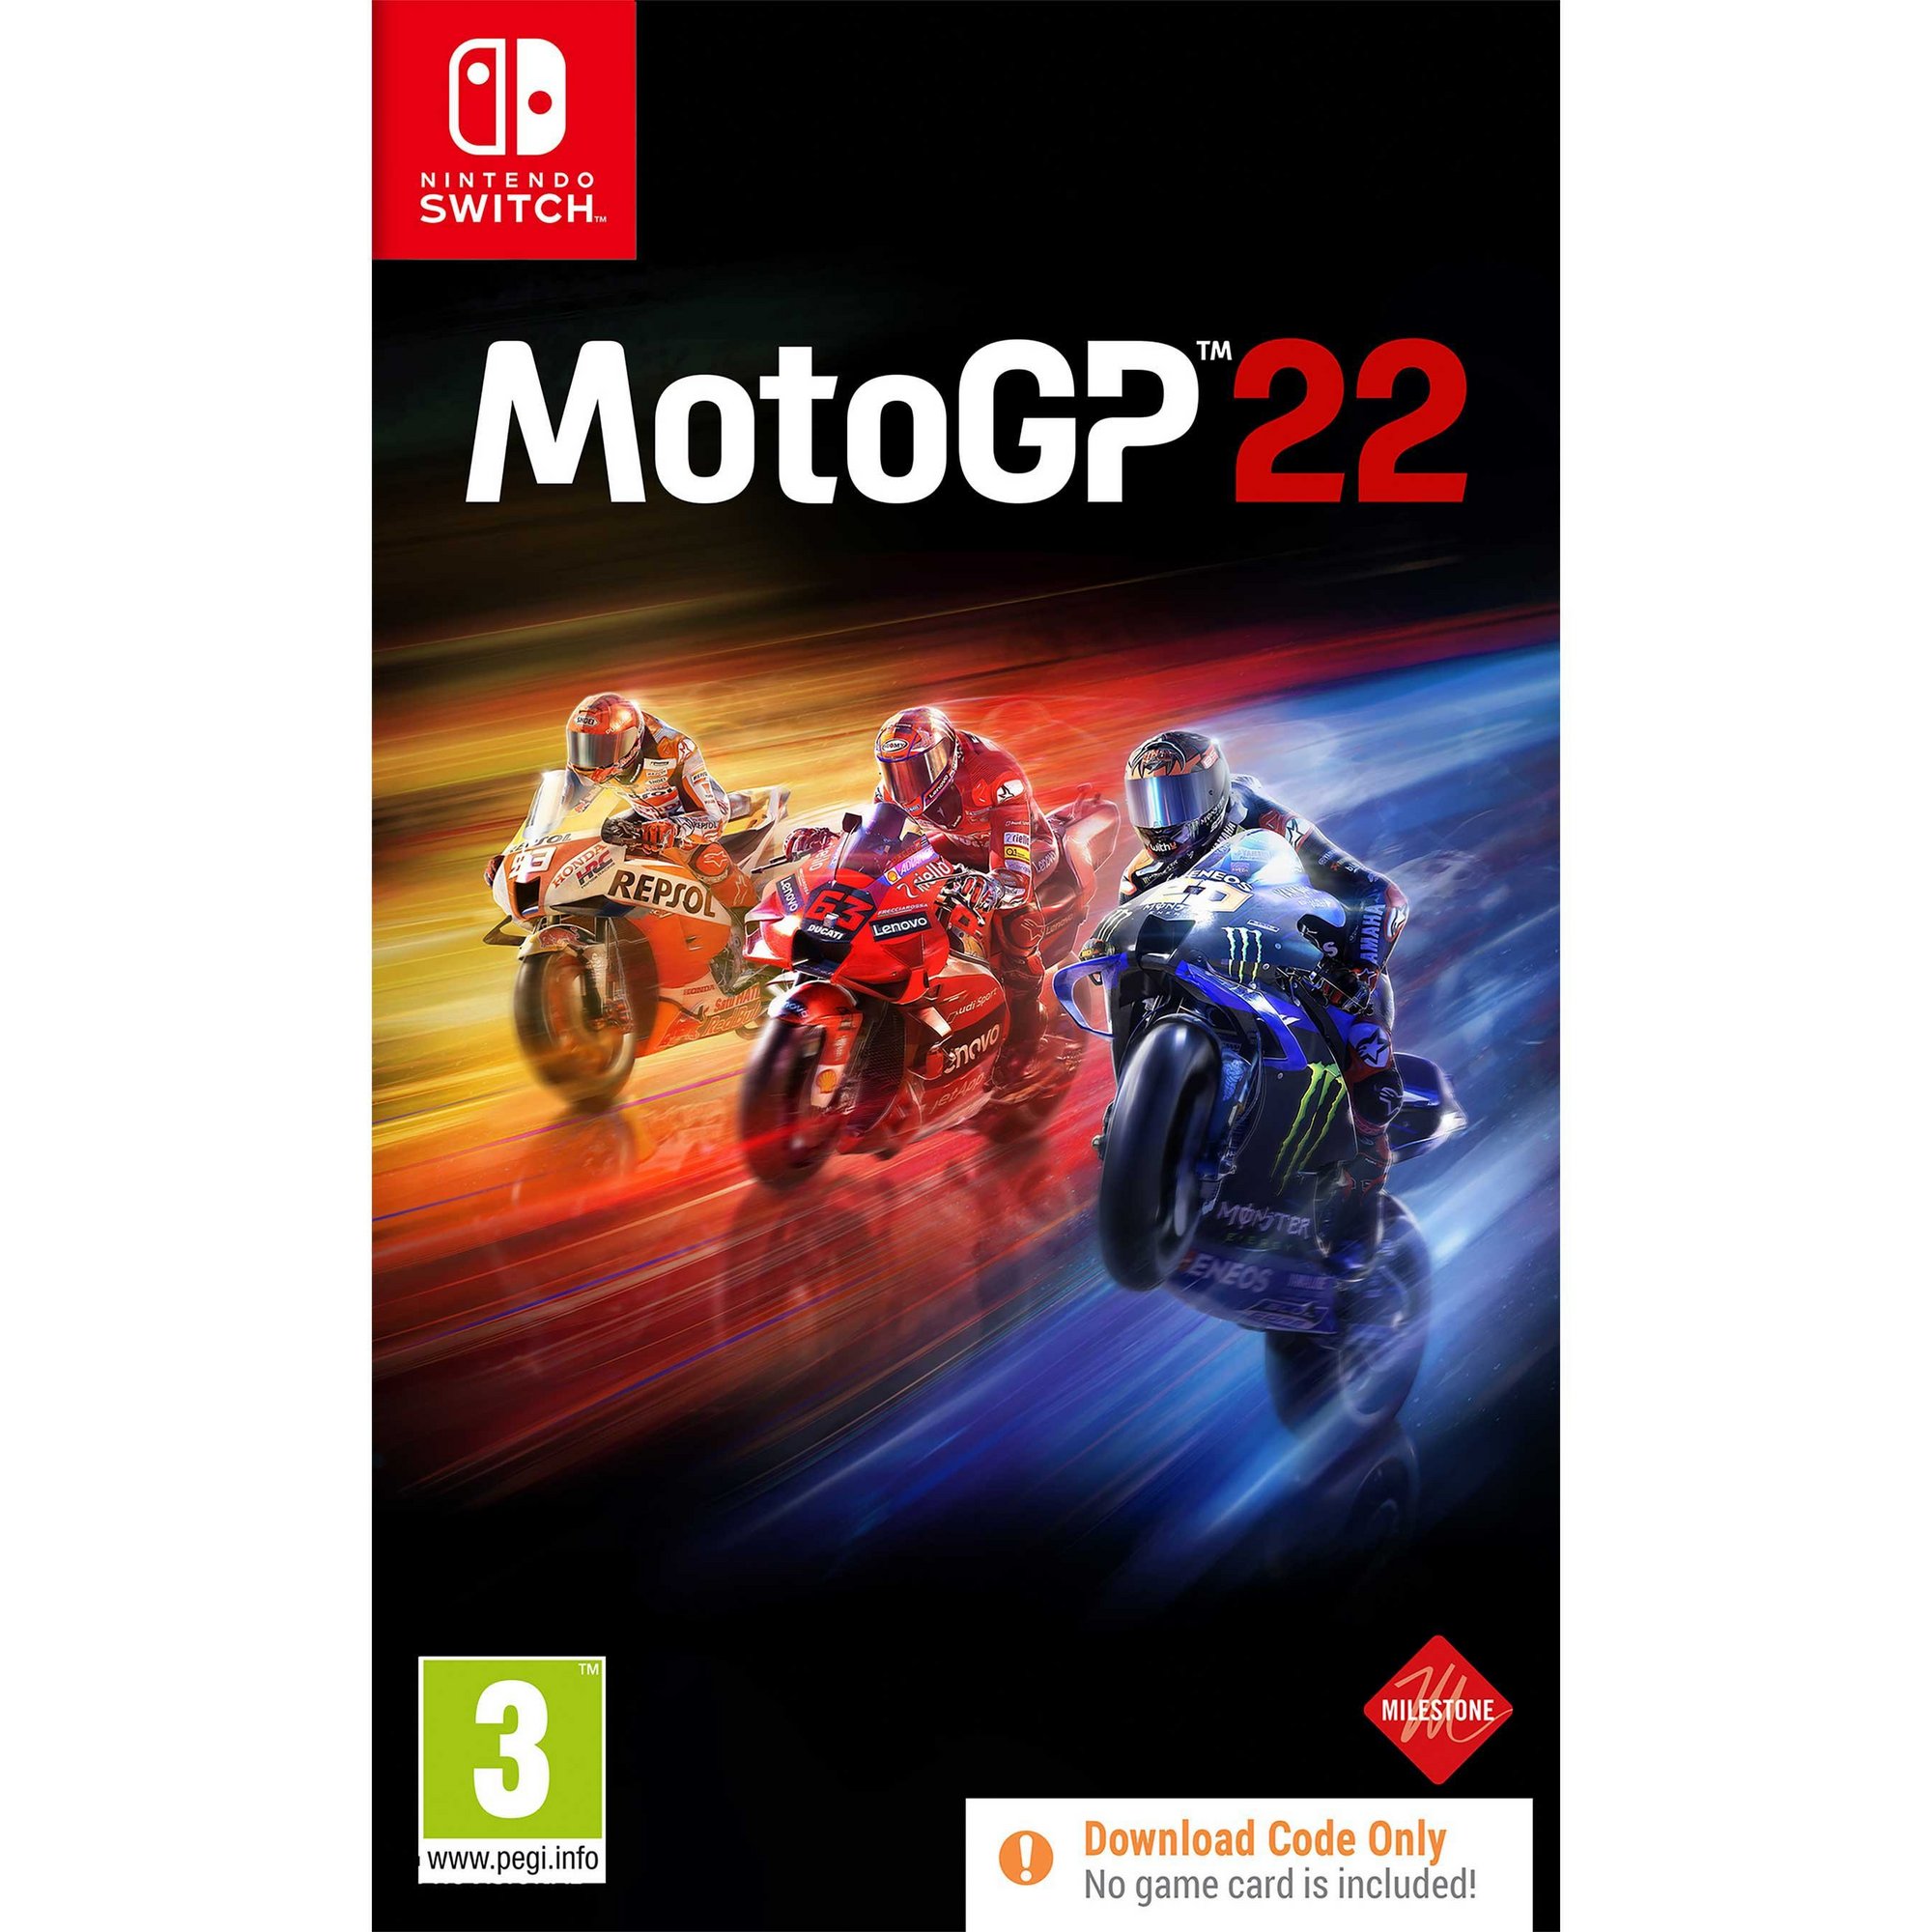 Nintendo Switch: Moto GP 22